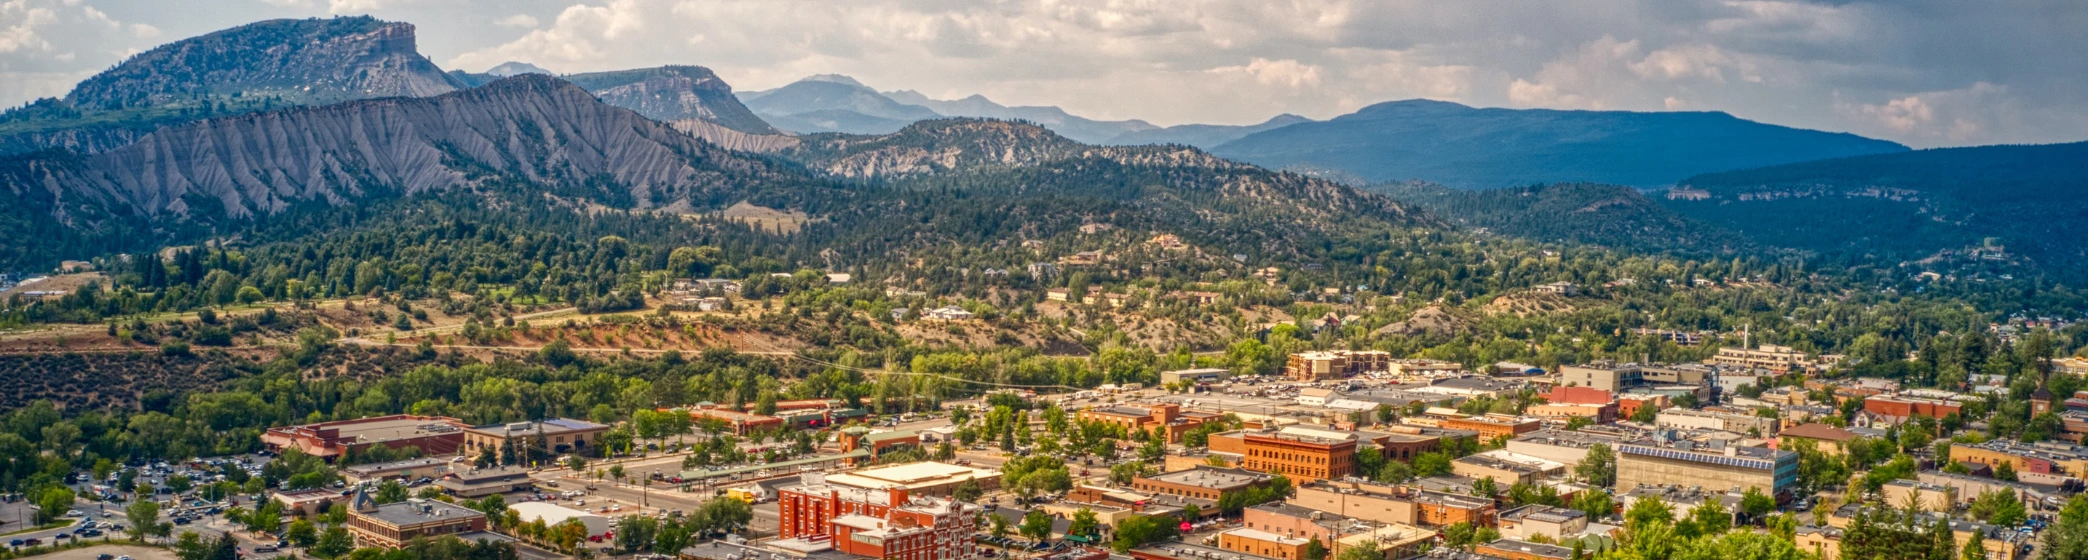 Work and Travel USA เมือง Durango รัฐ Colorado CO New Step newstep WAT ฝึกงาน ทำงาน ต่างประเทศ เที่ยว อเมริกา USA โครงการแลกเปลี่ยน วัฒนธรรม